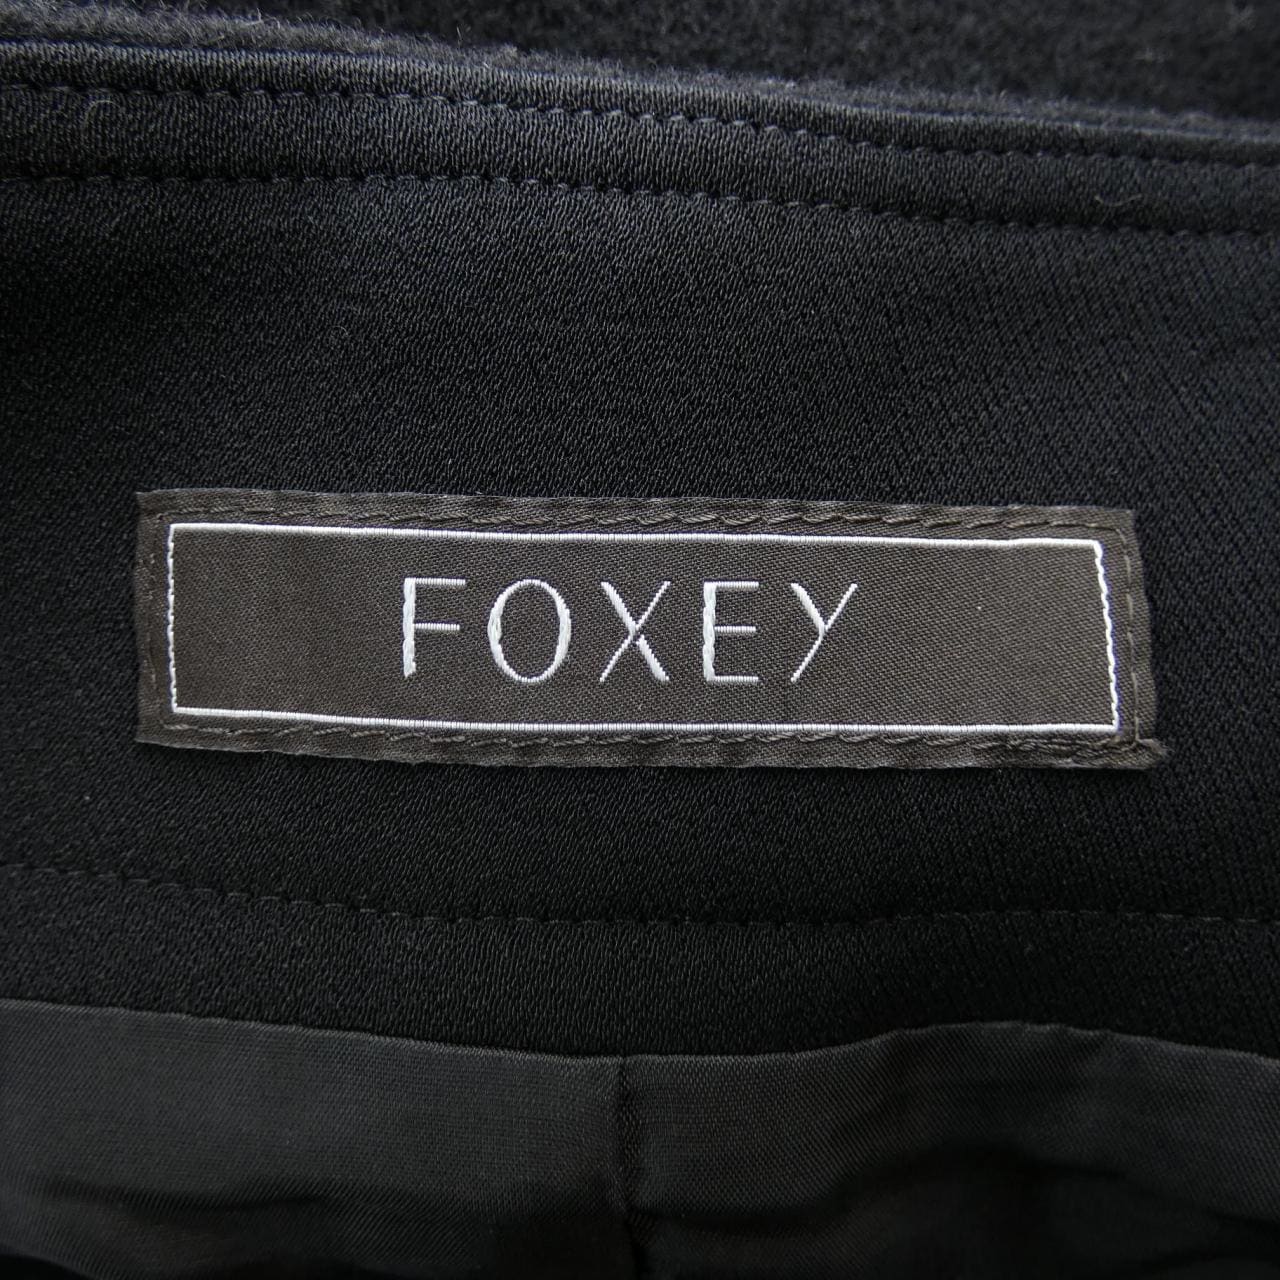 Foxy FOXEY short pants